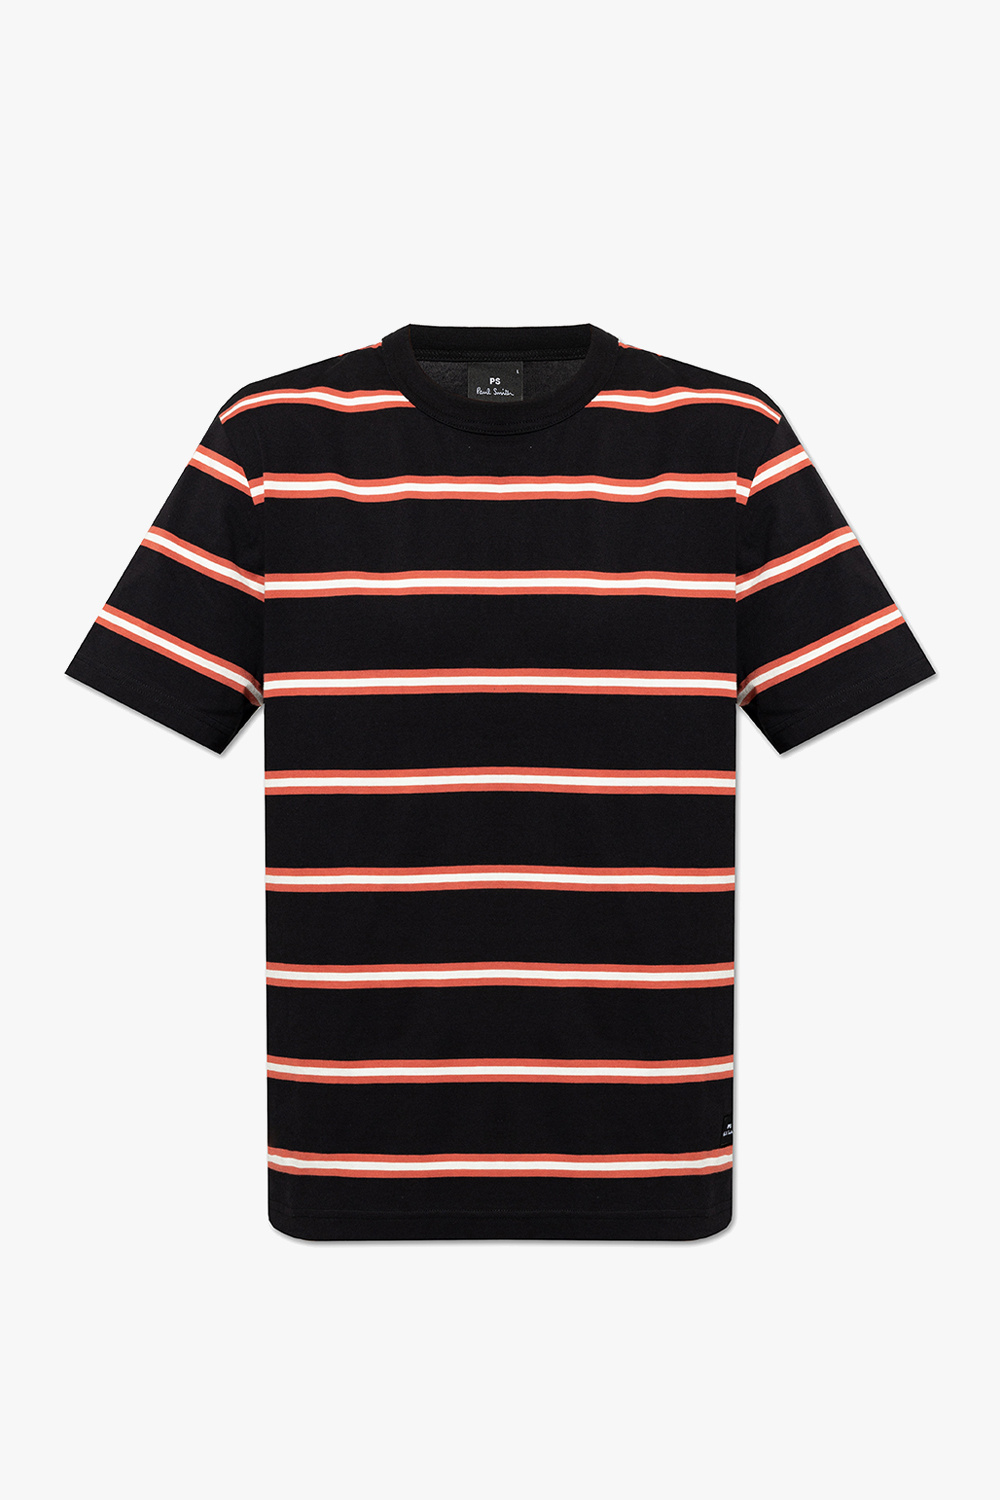 dolce & gabbana black printed shirt Striped T-shirt